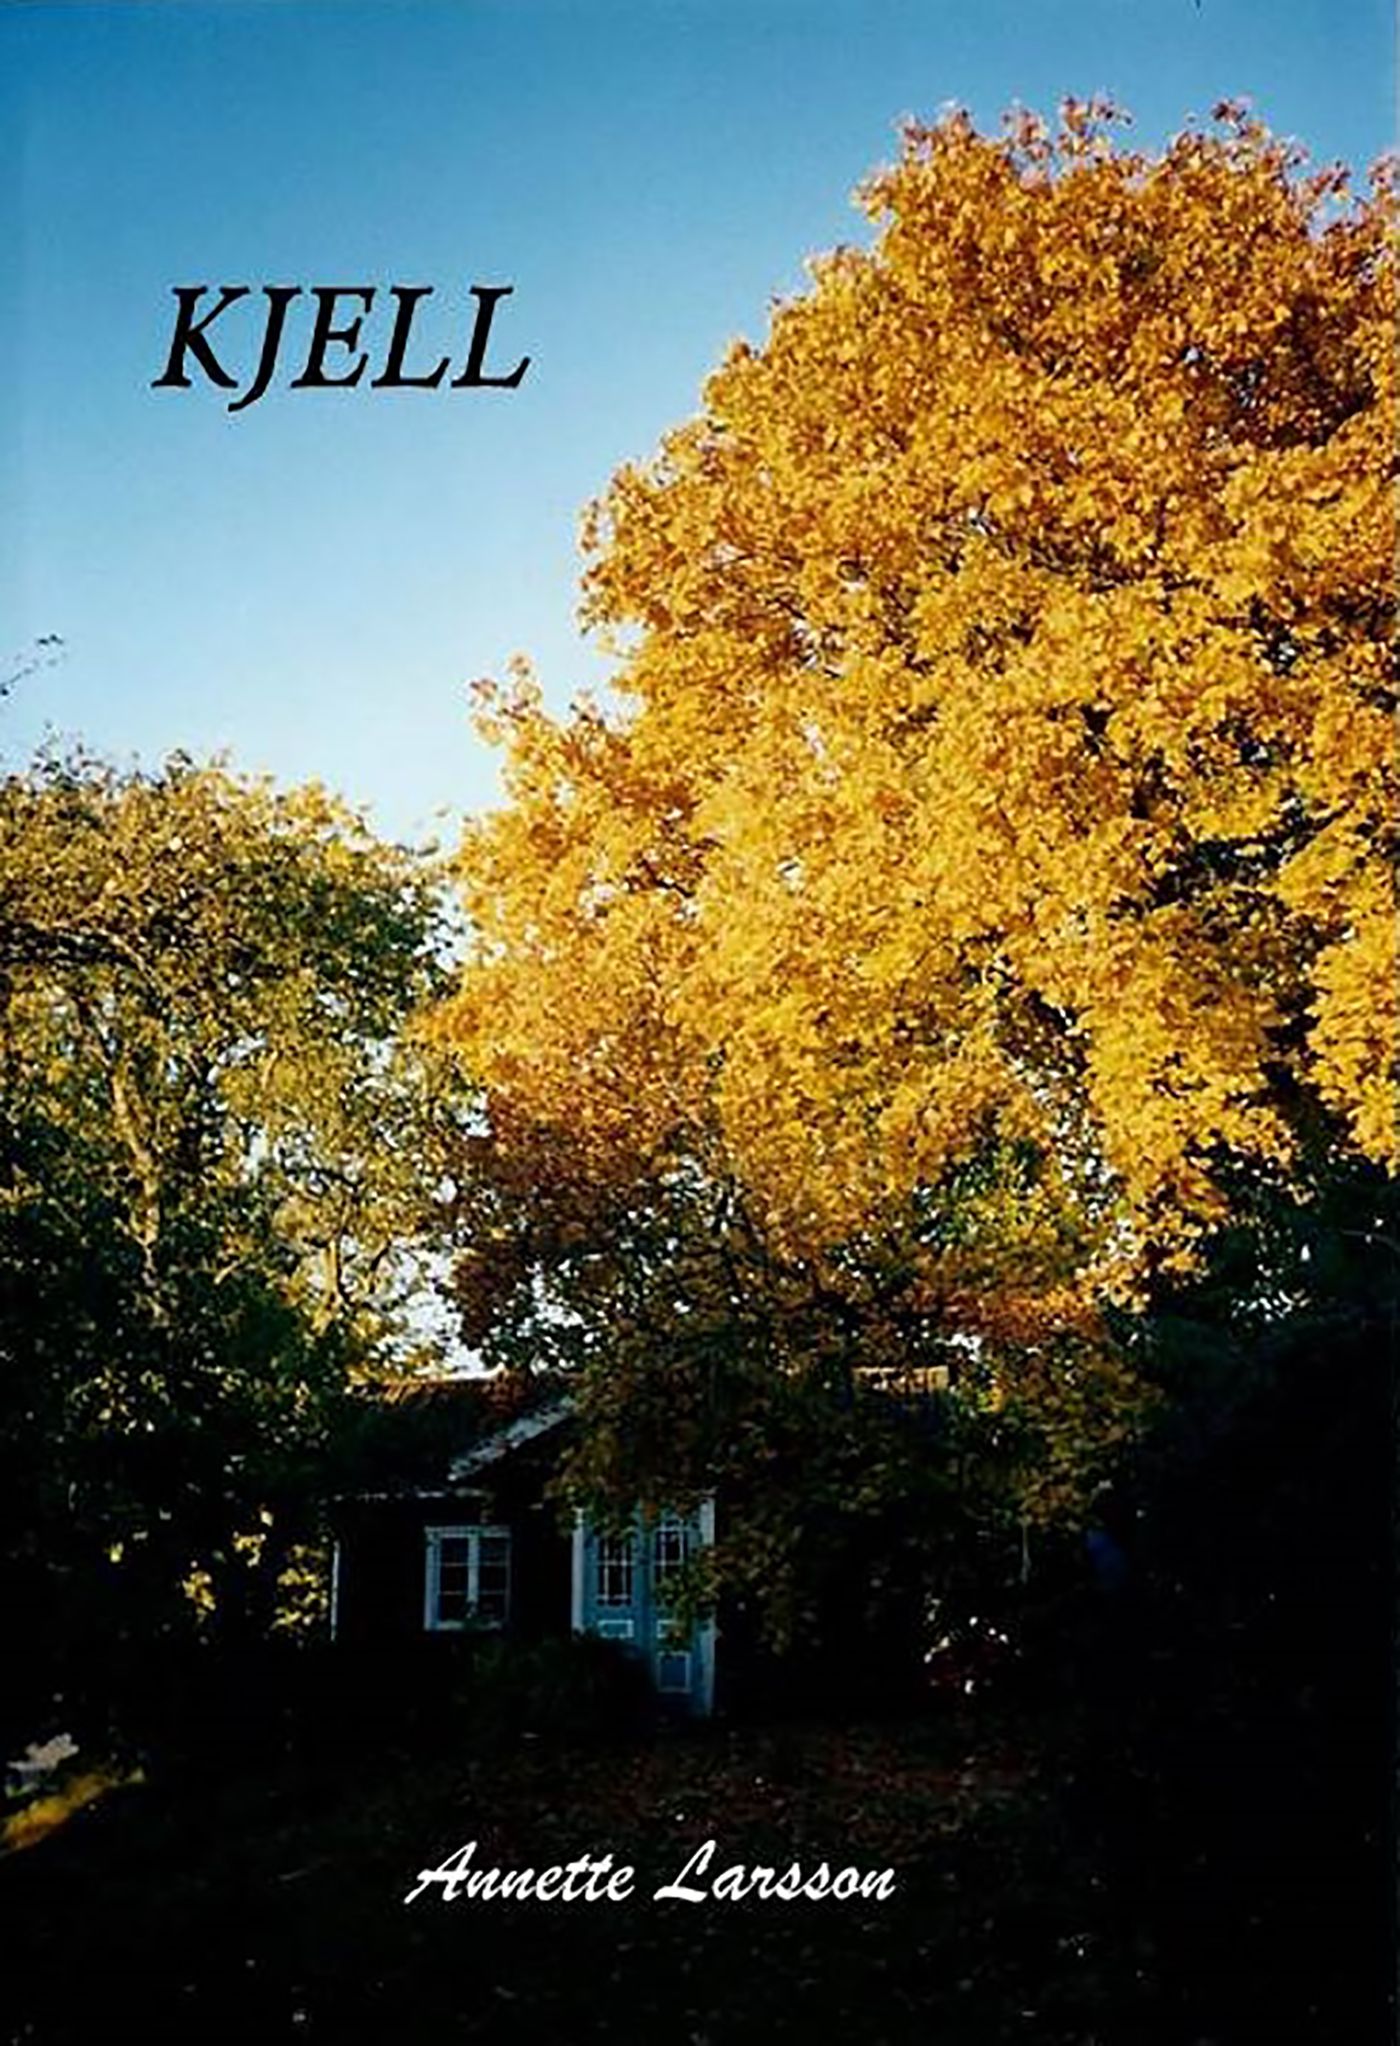 Kjell, eBook by Annette Larsson